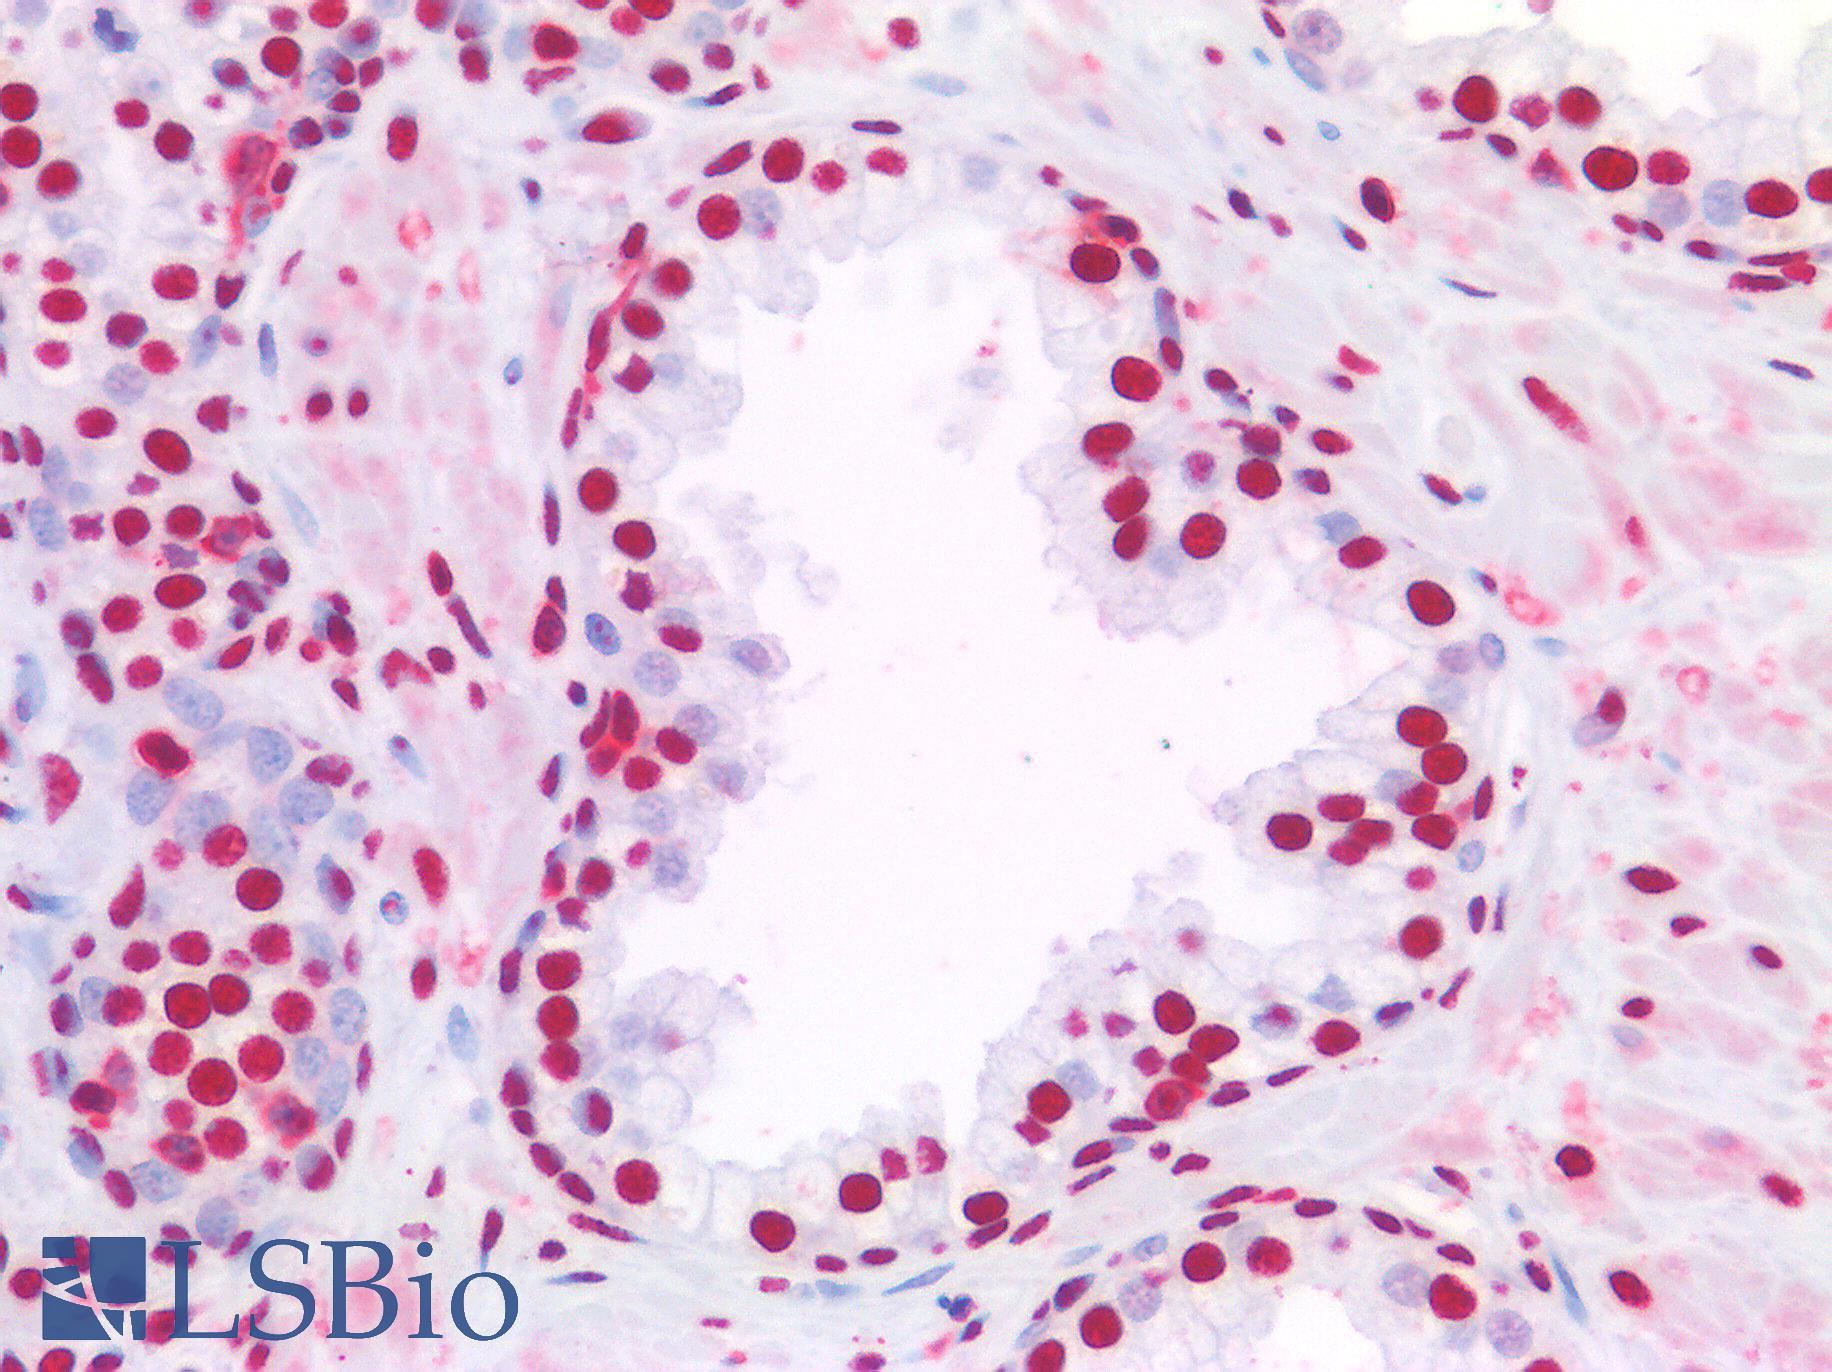 NALP3 / NLRP3 Antibody - Human Prostate: Formalin-Fixed, Paraffin-Embedded (FFPE)